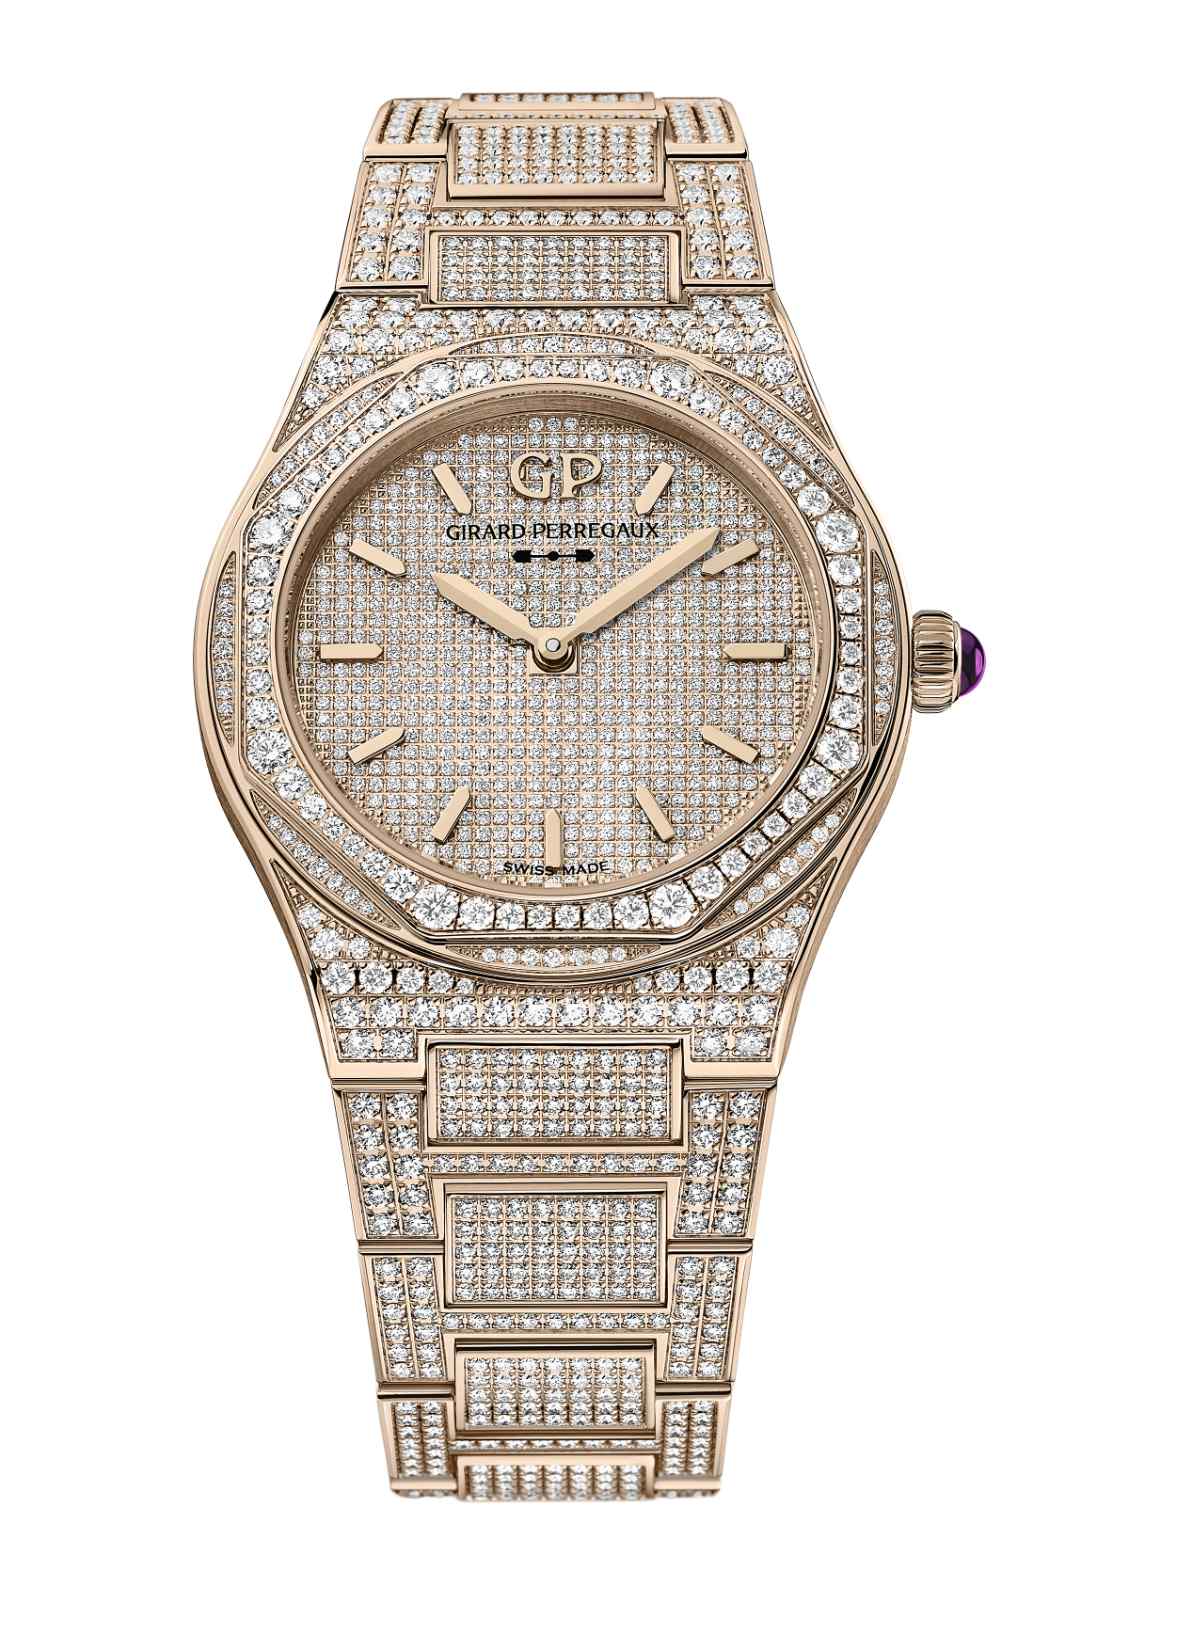 Girard-Perregaux Presents Its New Laureato 34 MM High Jewellery Watch